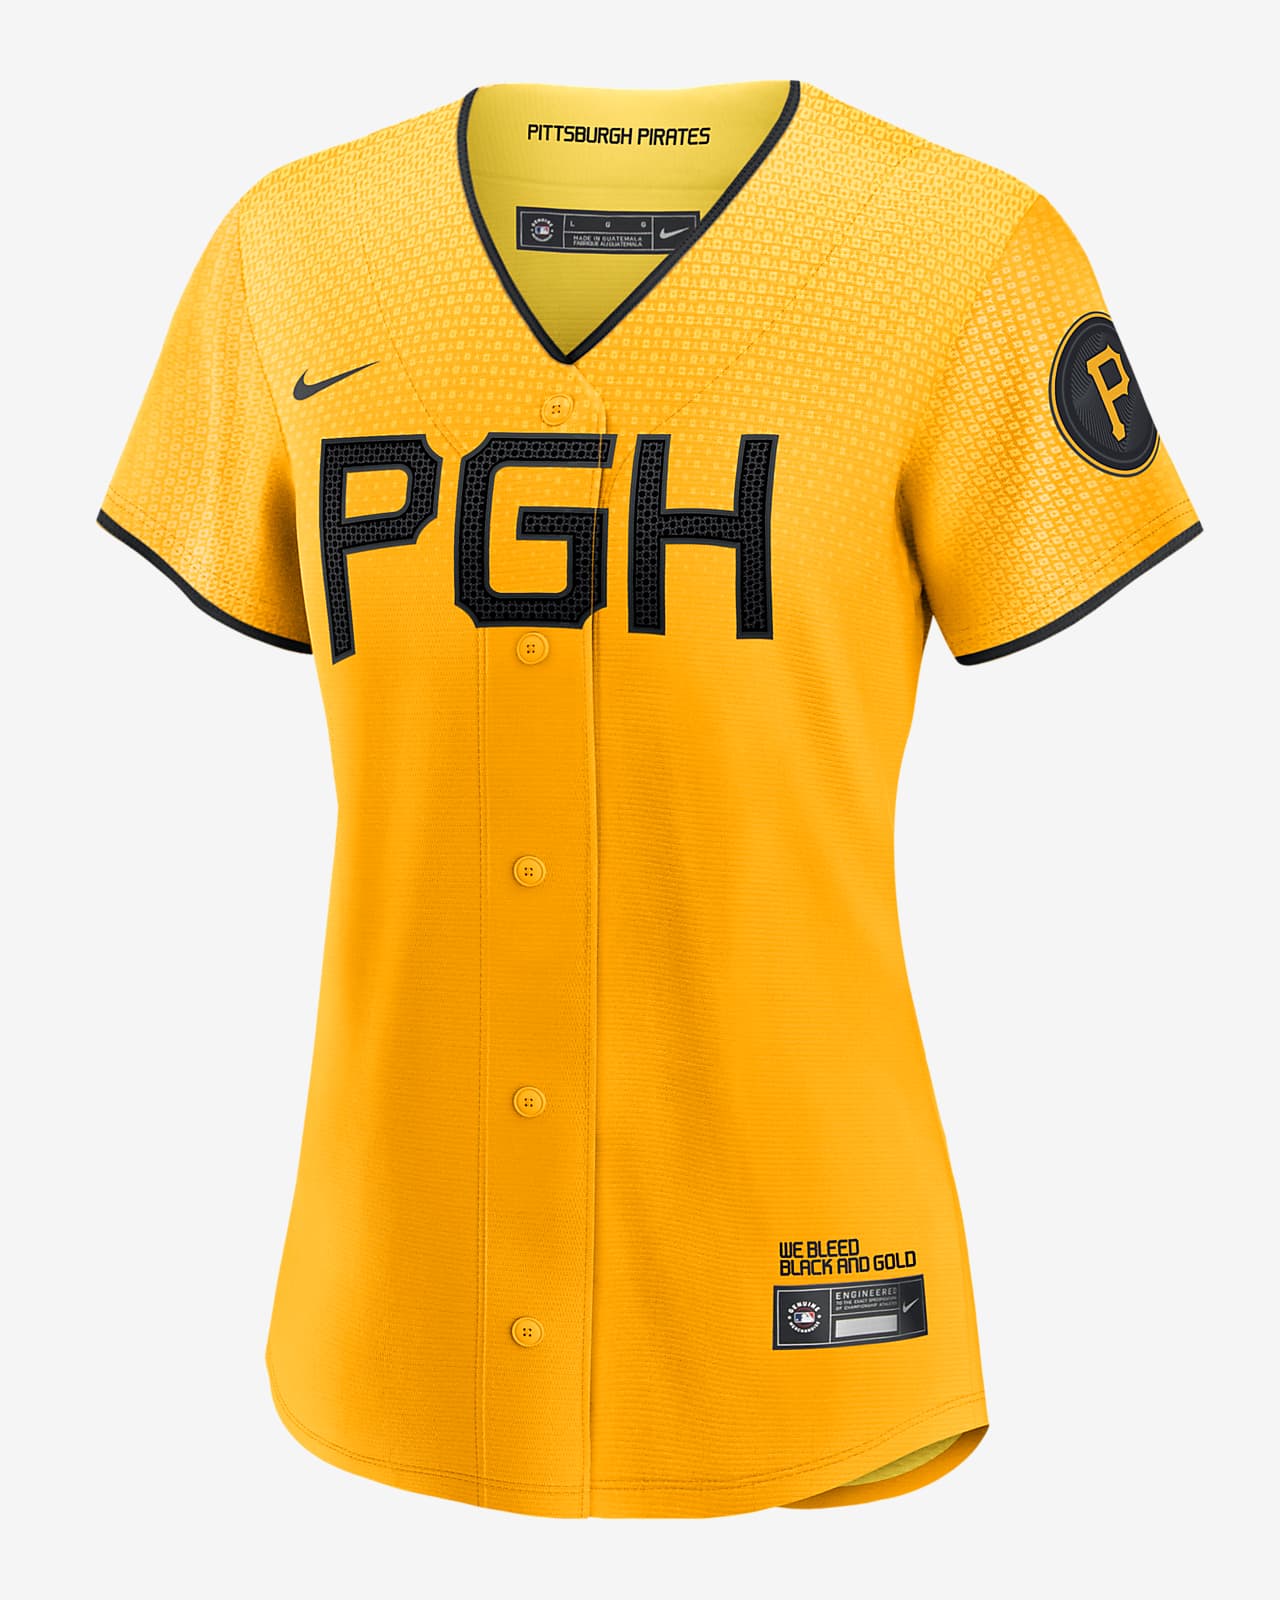 MLB Pittsburgh Pirates City Connect Women's Replica Baseball Jersey.